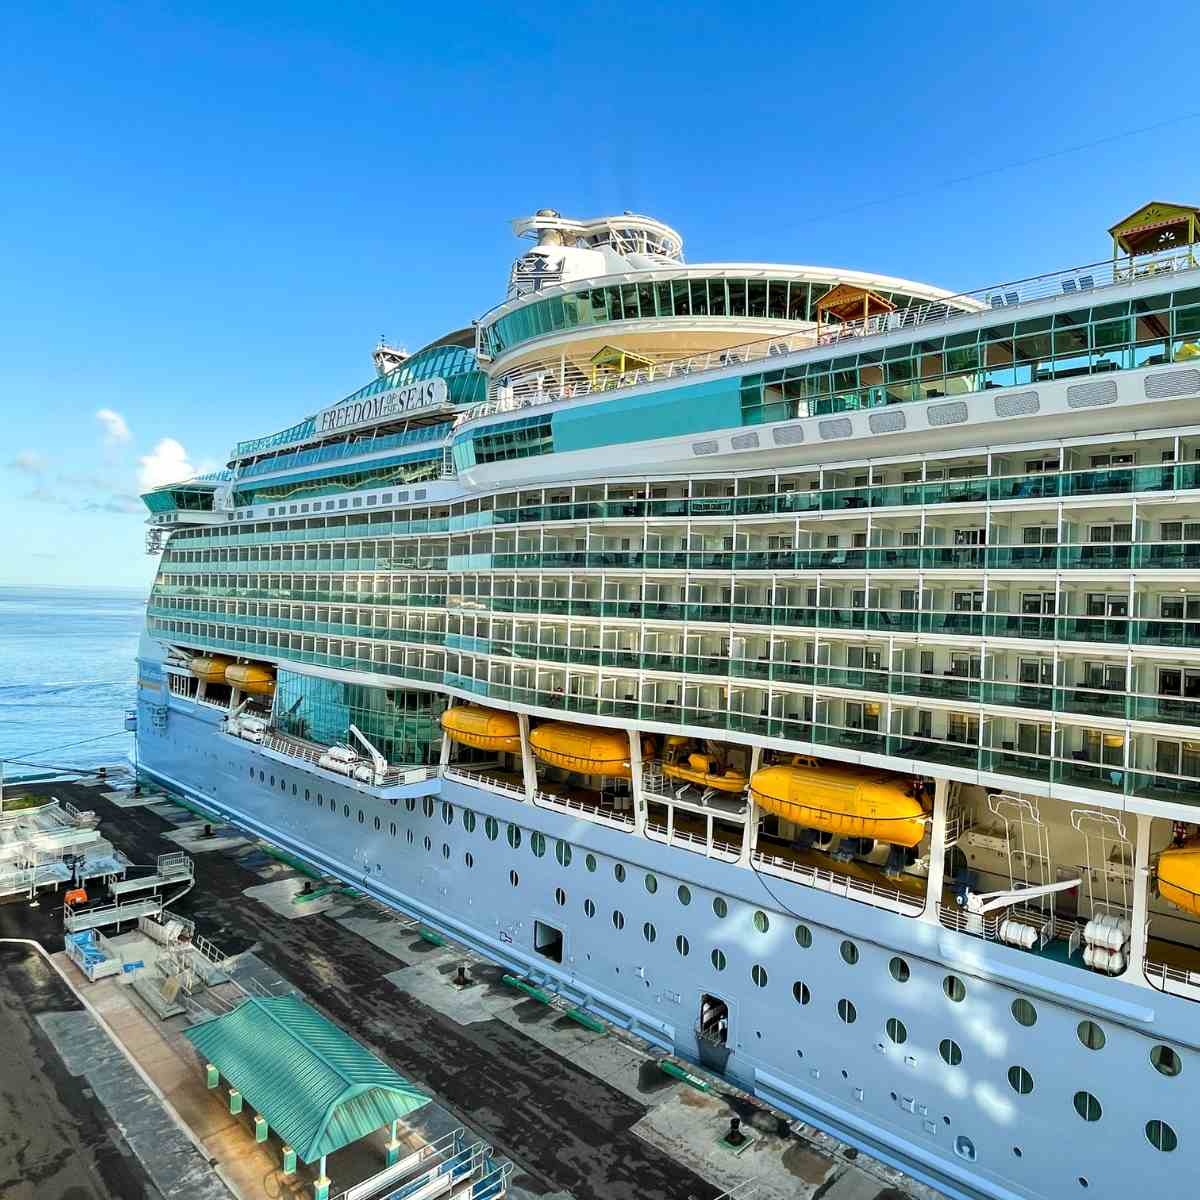 Nassau Bahamas - September 15, 2021: The Royal Caribbean Cruise Ship Freedom of the Seas in Nassau, Bahamas